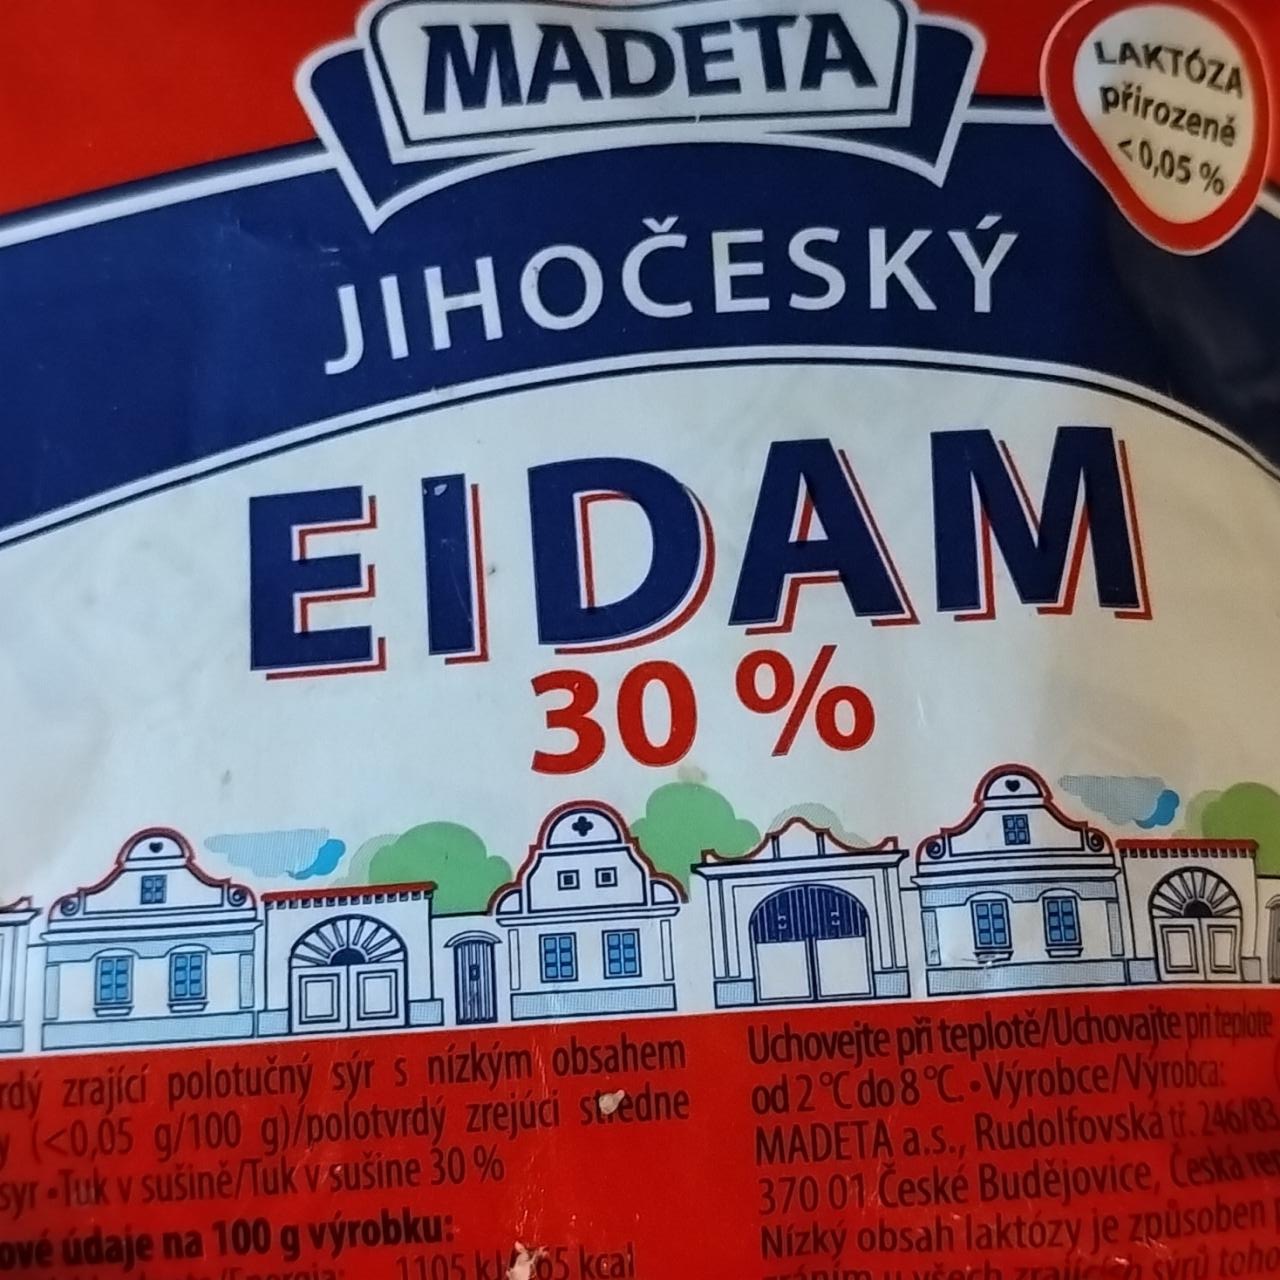 Fotografie - Jihočeský Eidam 30% Madeta